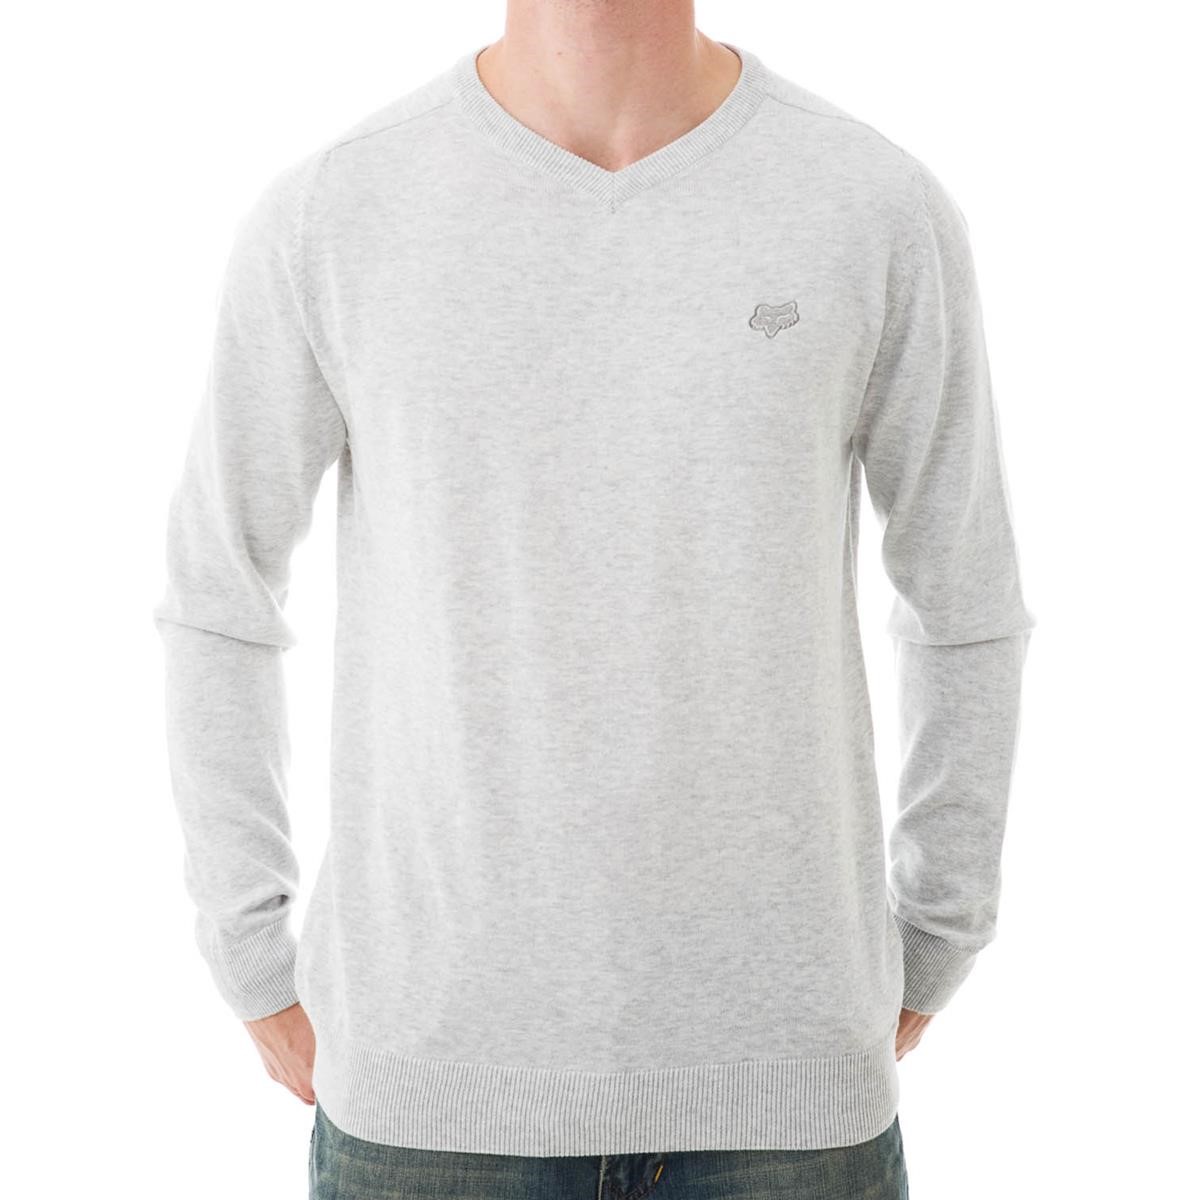 Freizeit/Streetwear Bekleidung-Pullover/Longsleeves - Fox Pullover Mr. Clean Light Heather Grey